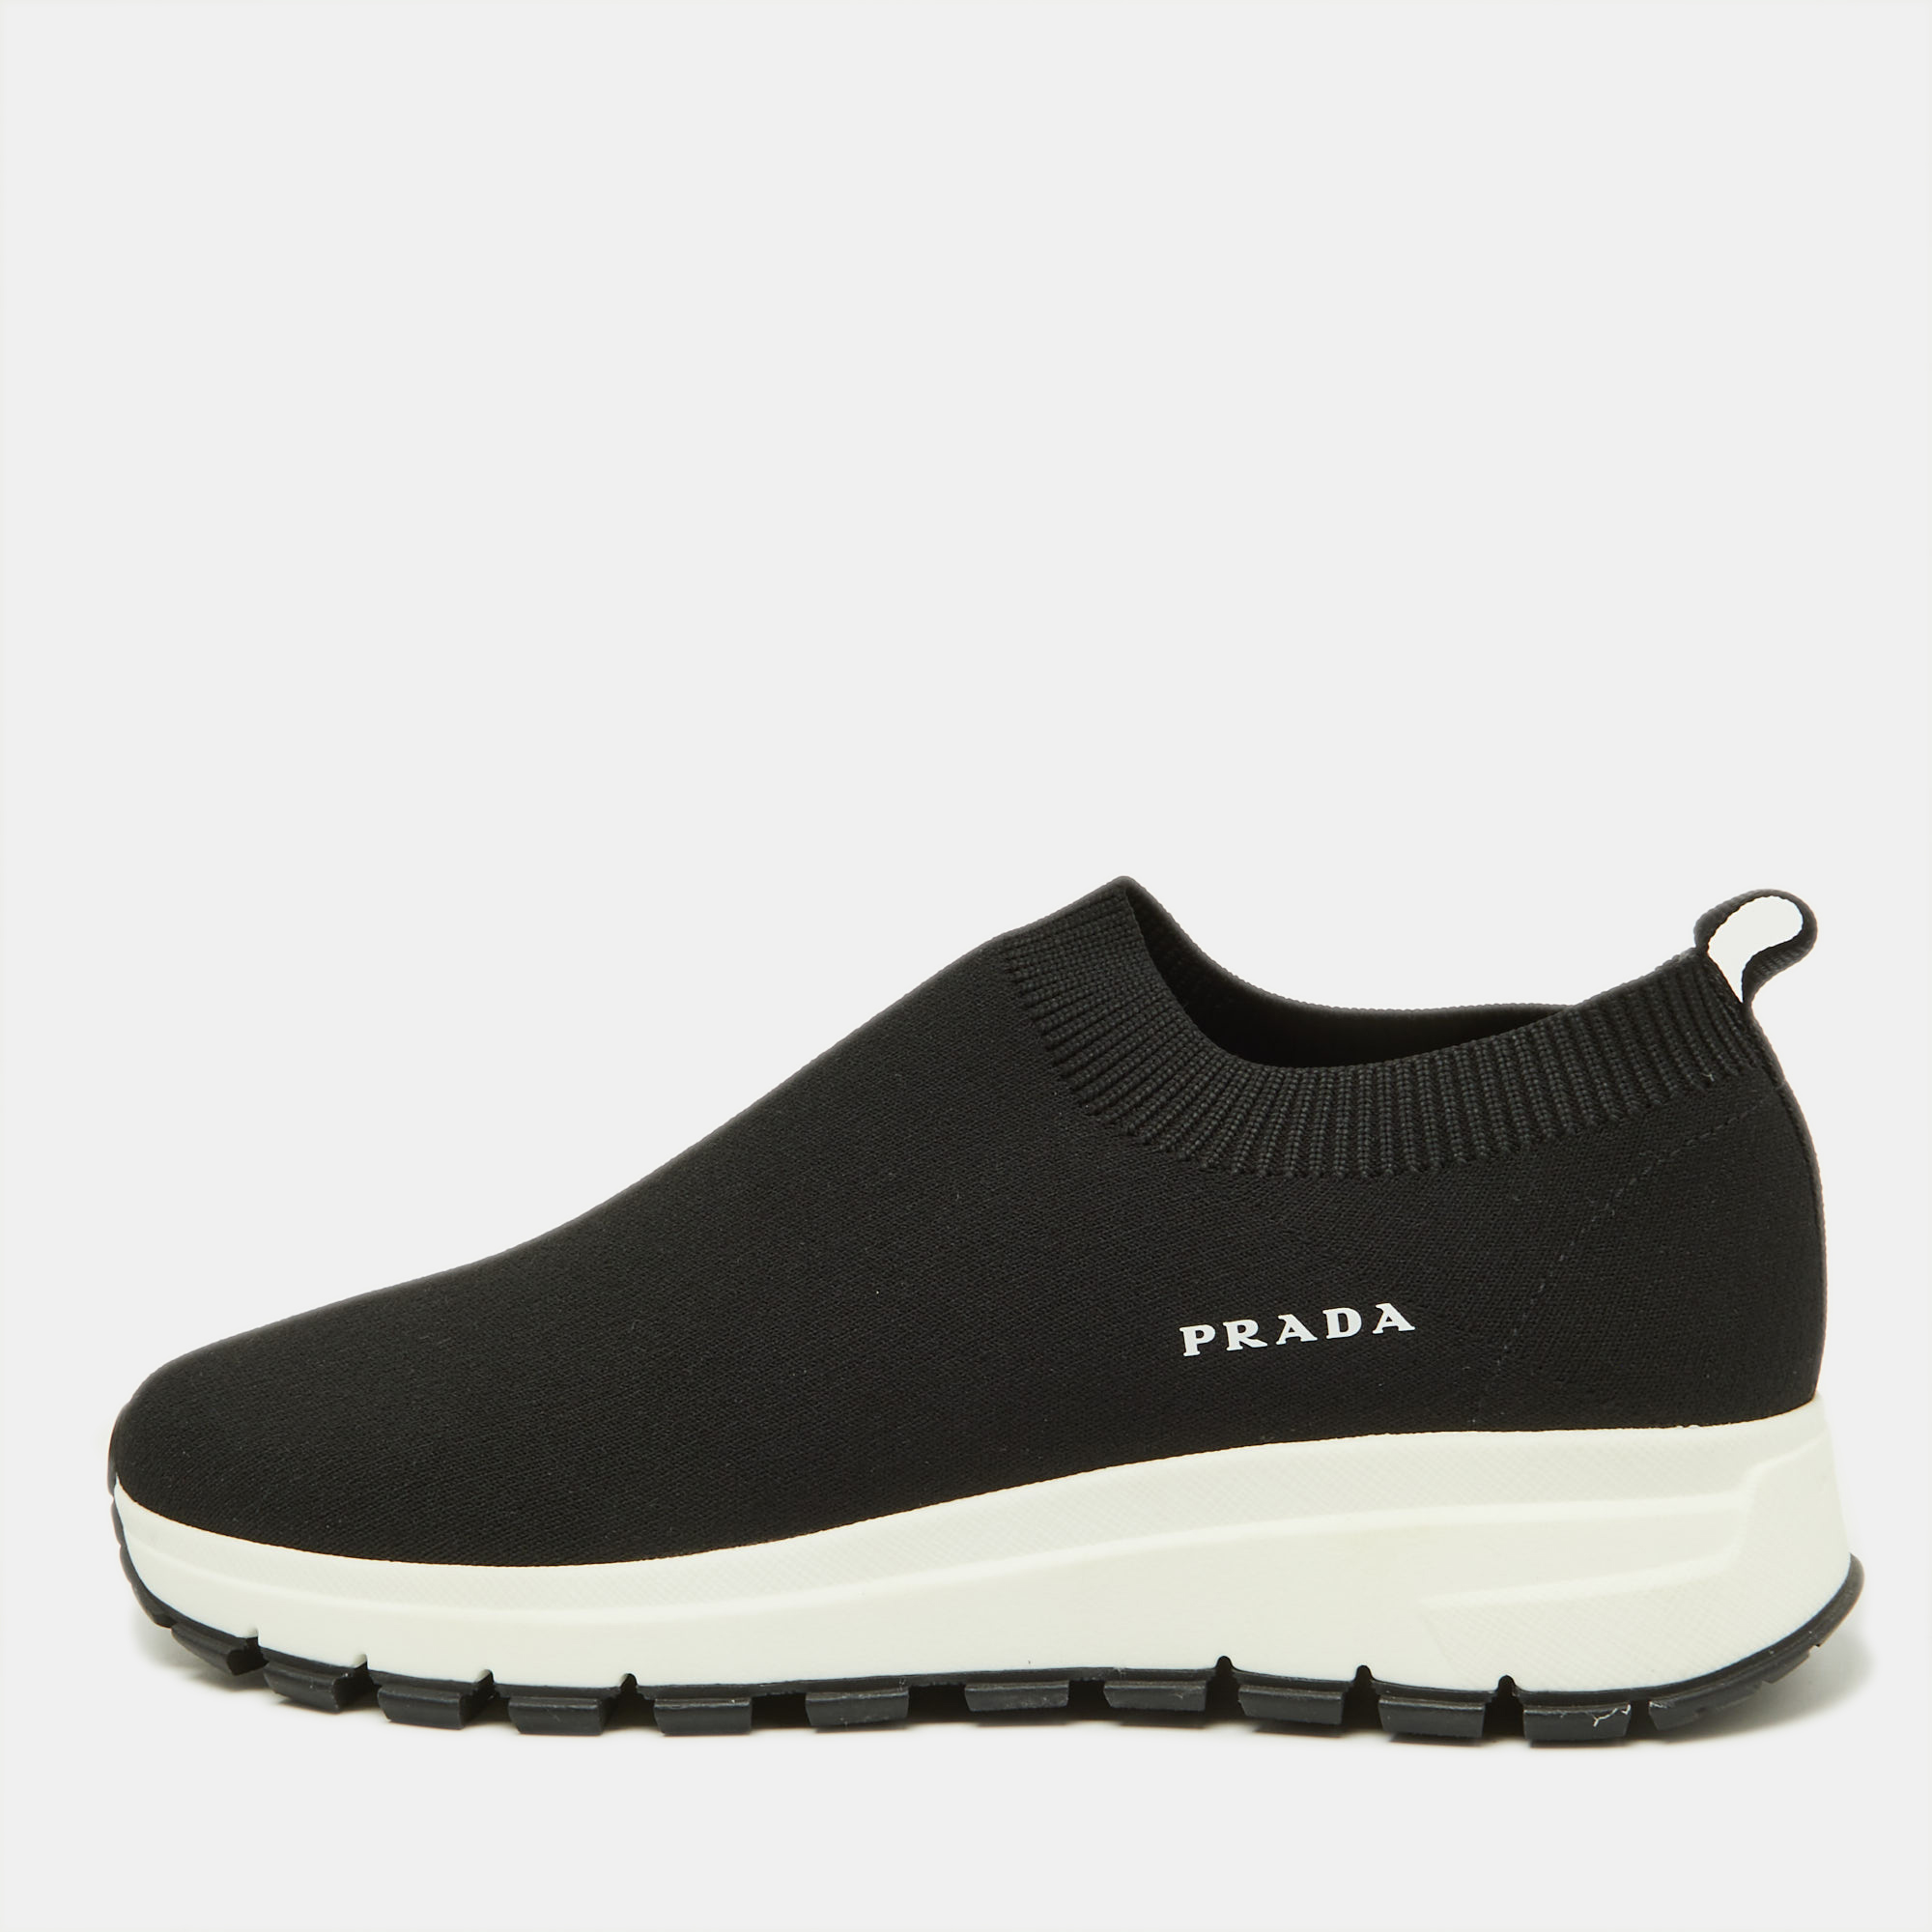 Prada Black Knit Fabric Slip On Sneakers Size 37.5